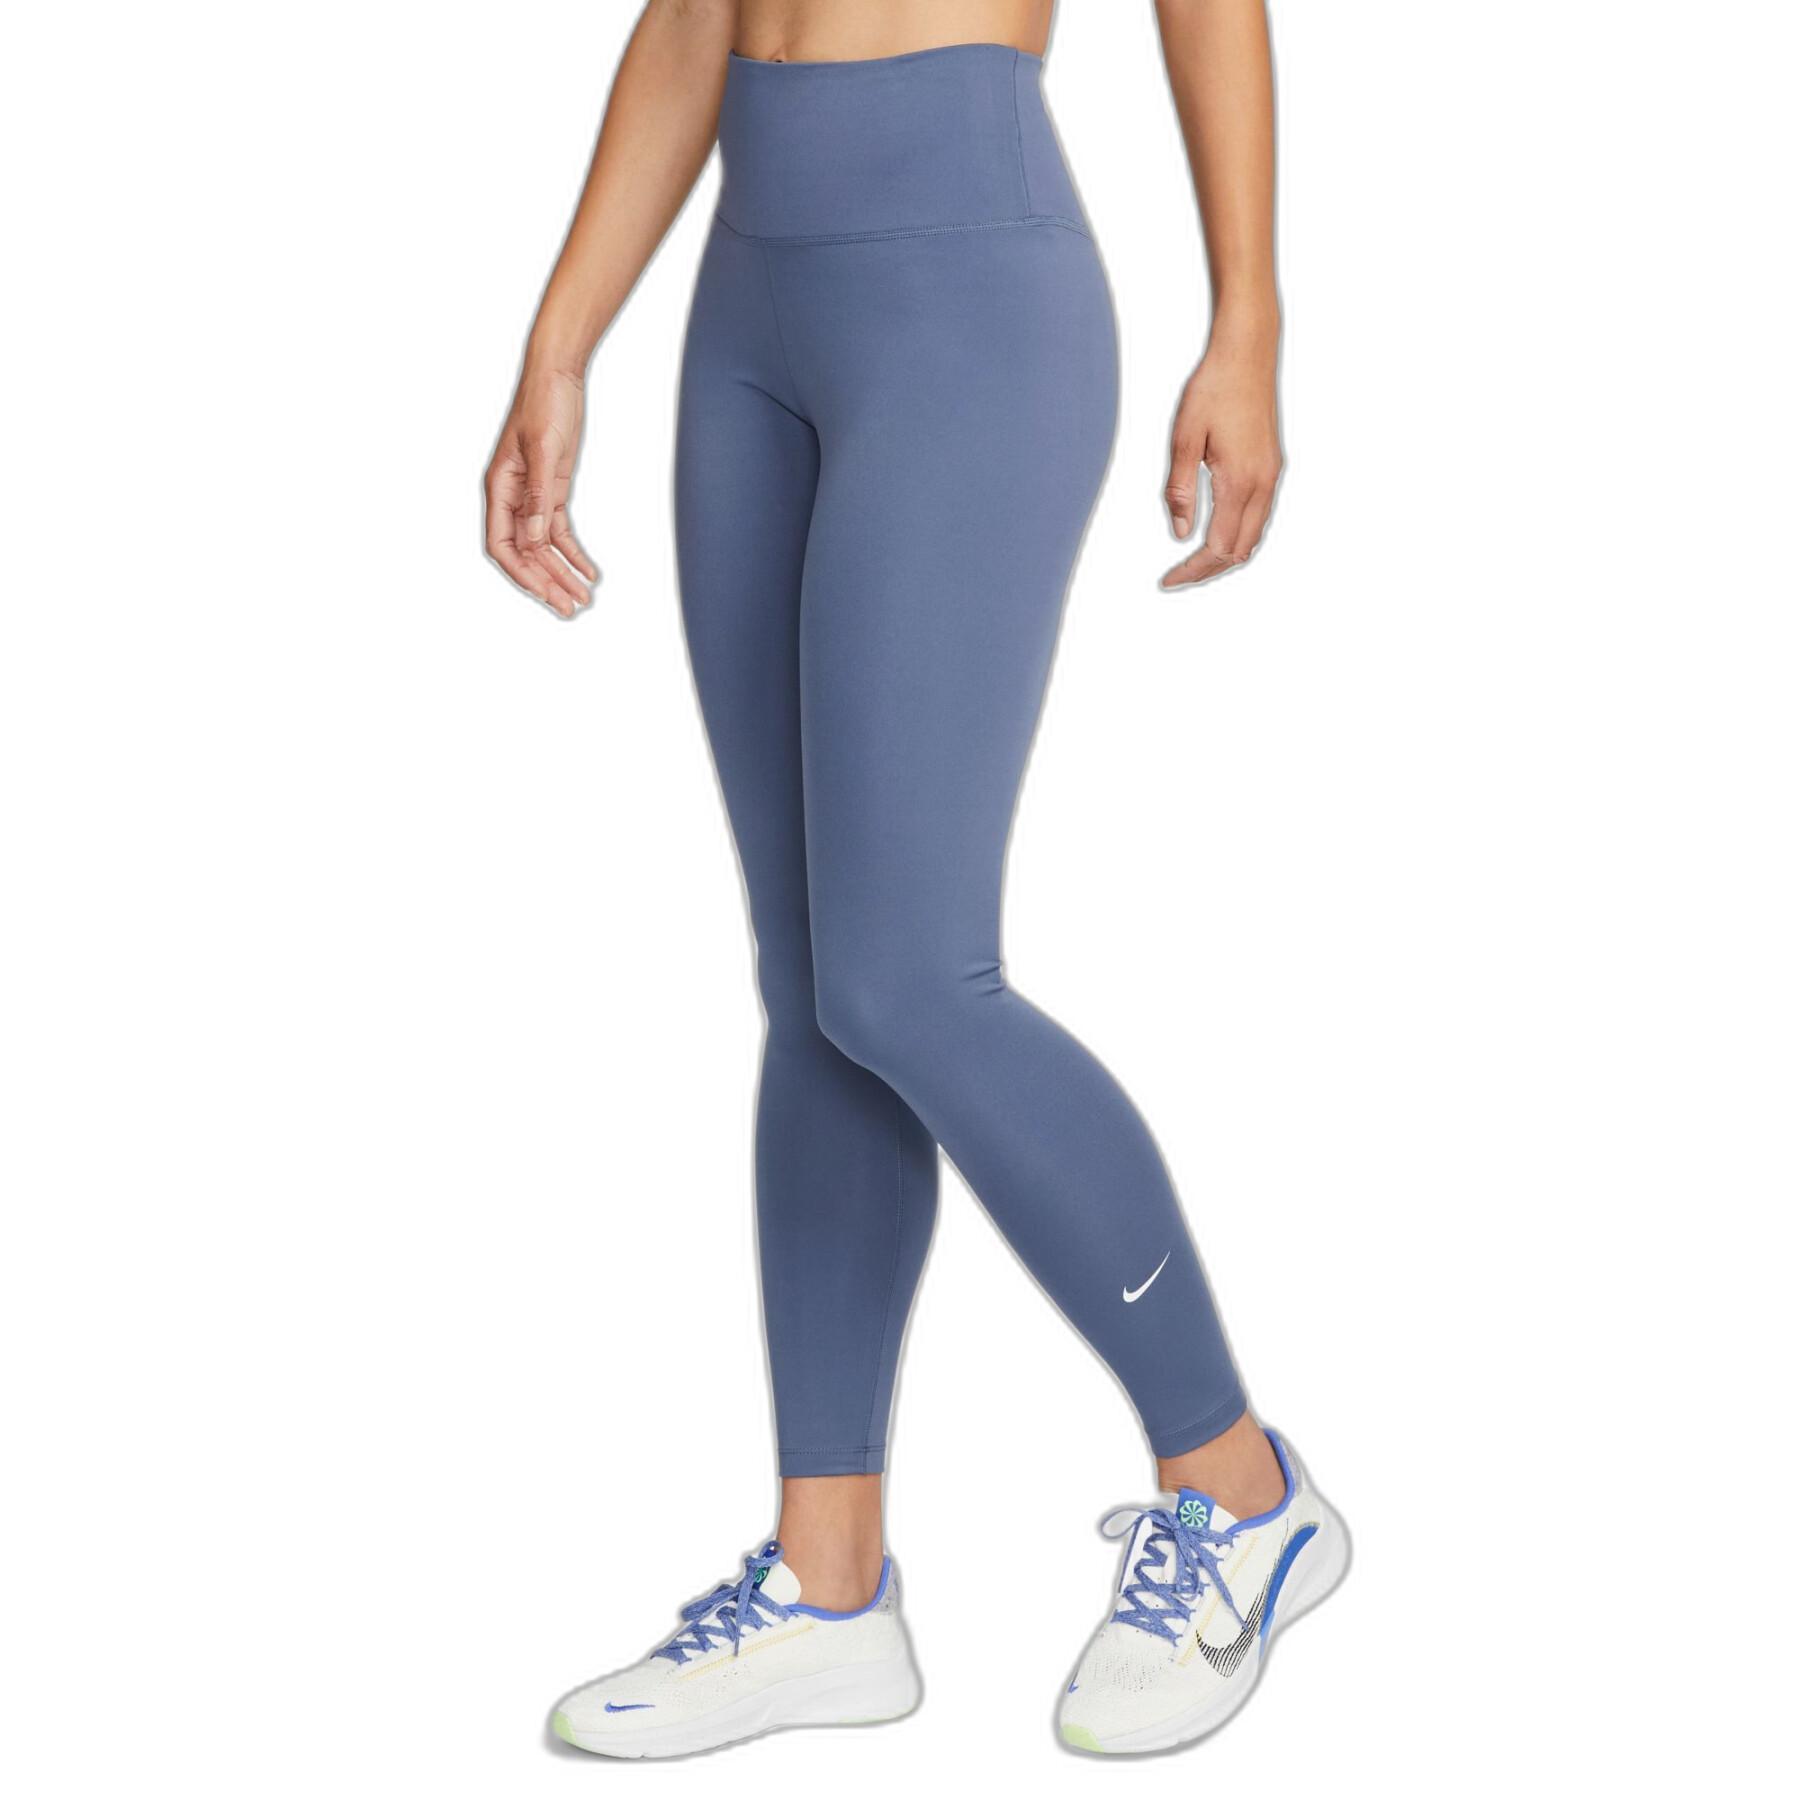 Legging high waist woman Nike One Dri-FIT - Baselayers - Women's